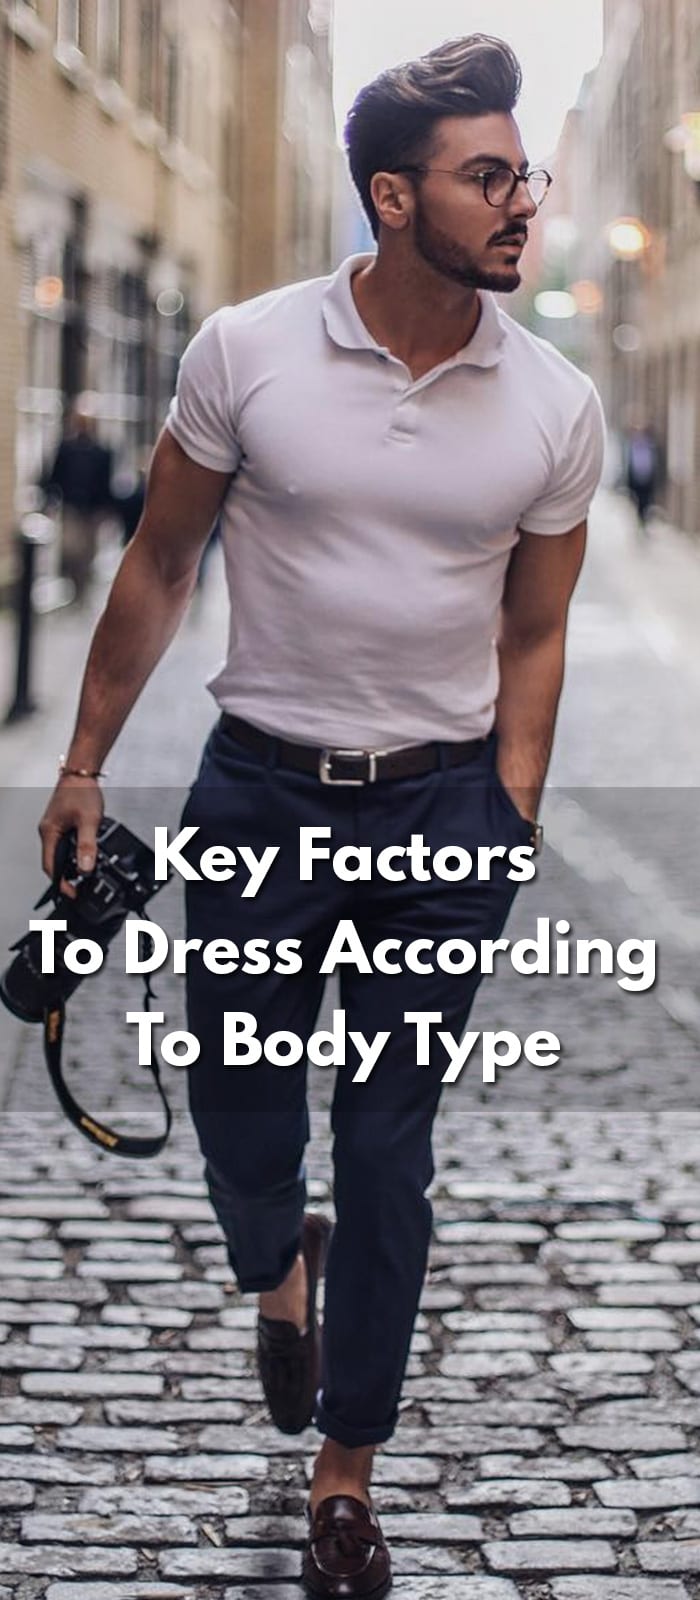 Key-Factors-To-Dress-According-To-Body-Type.